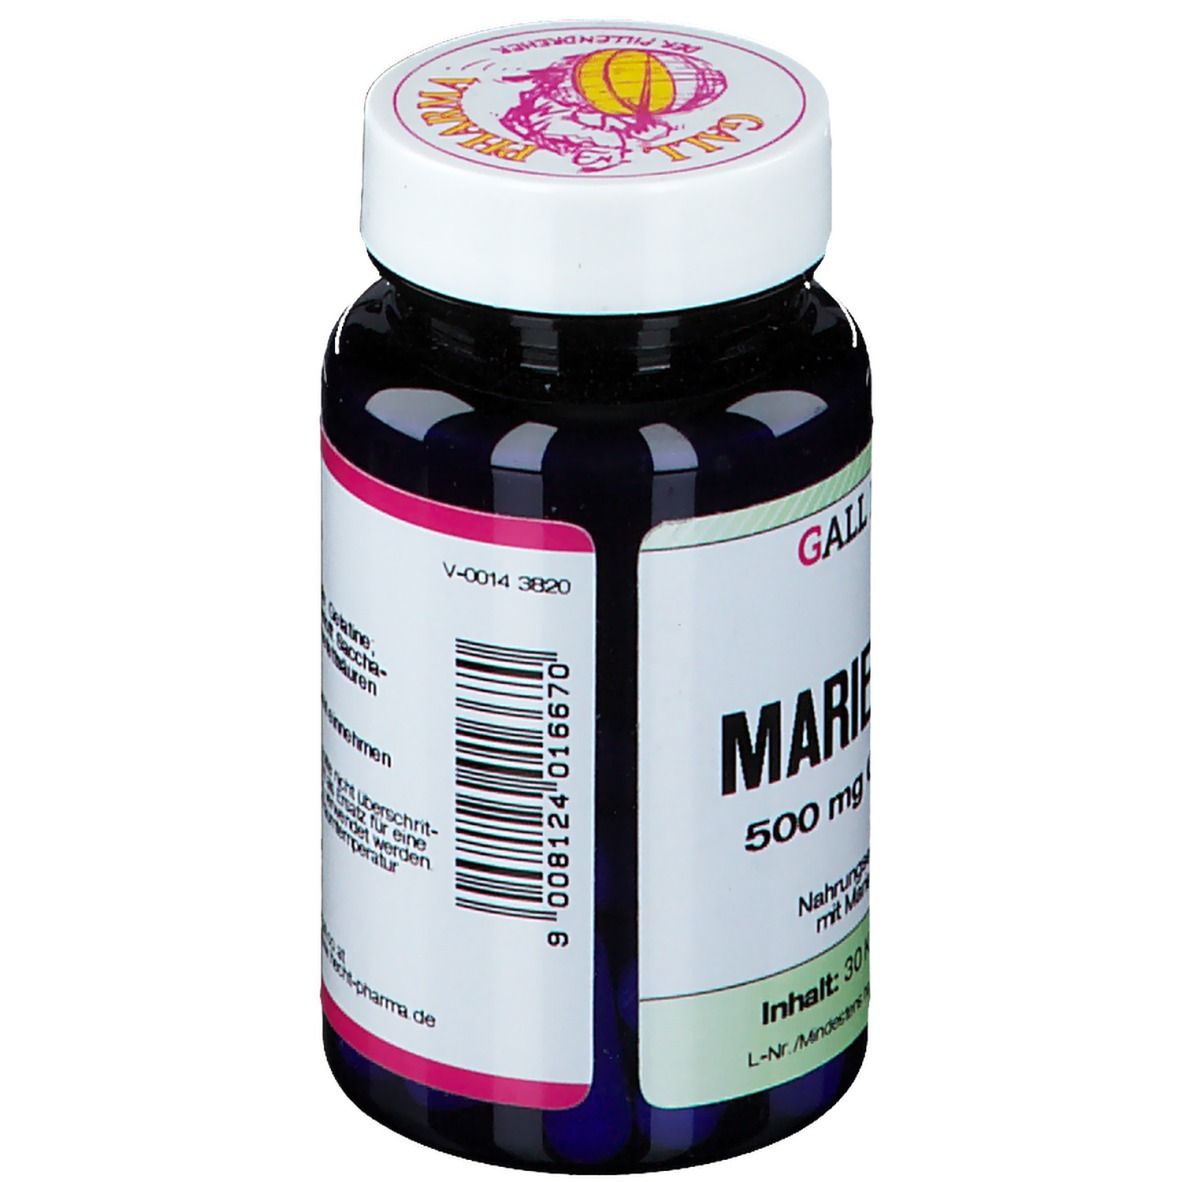 GALL PHARMA Mariendistel 500 mg GPH Kapseln